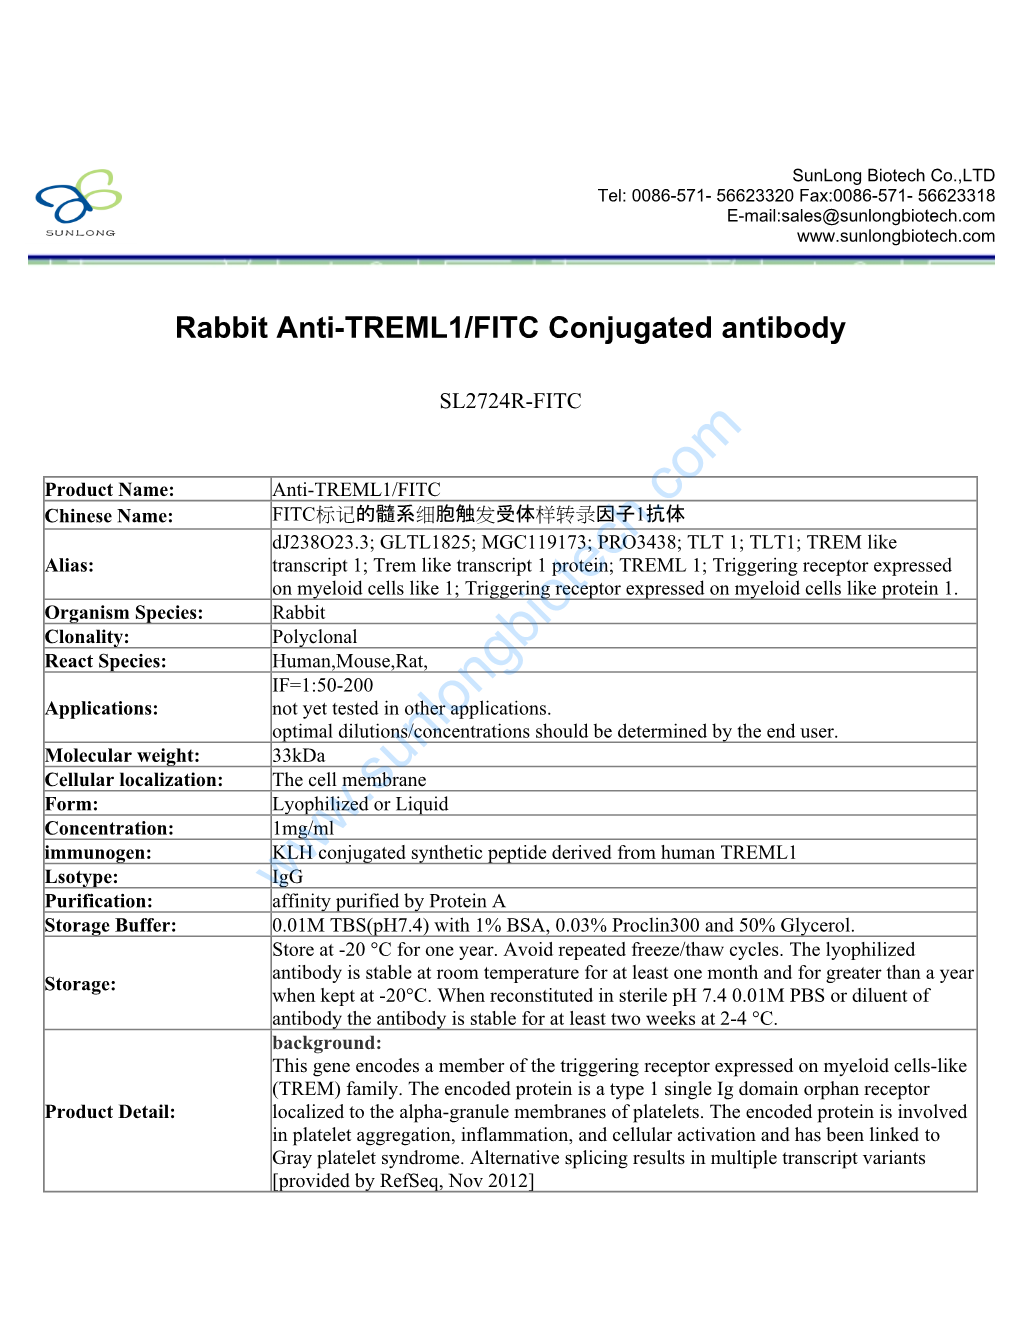 Rabbit Anti-TREML1/FITC Conjugated Antibody-SL2724R-FITC